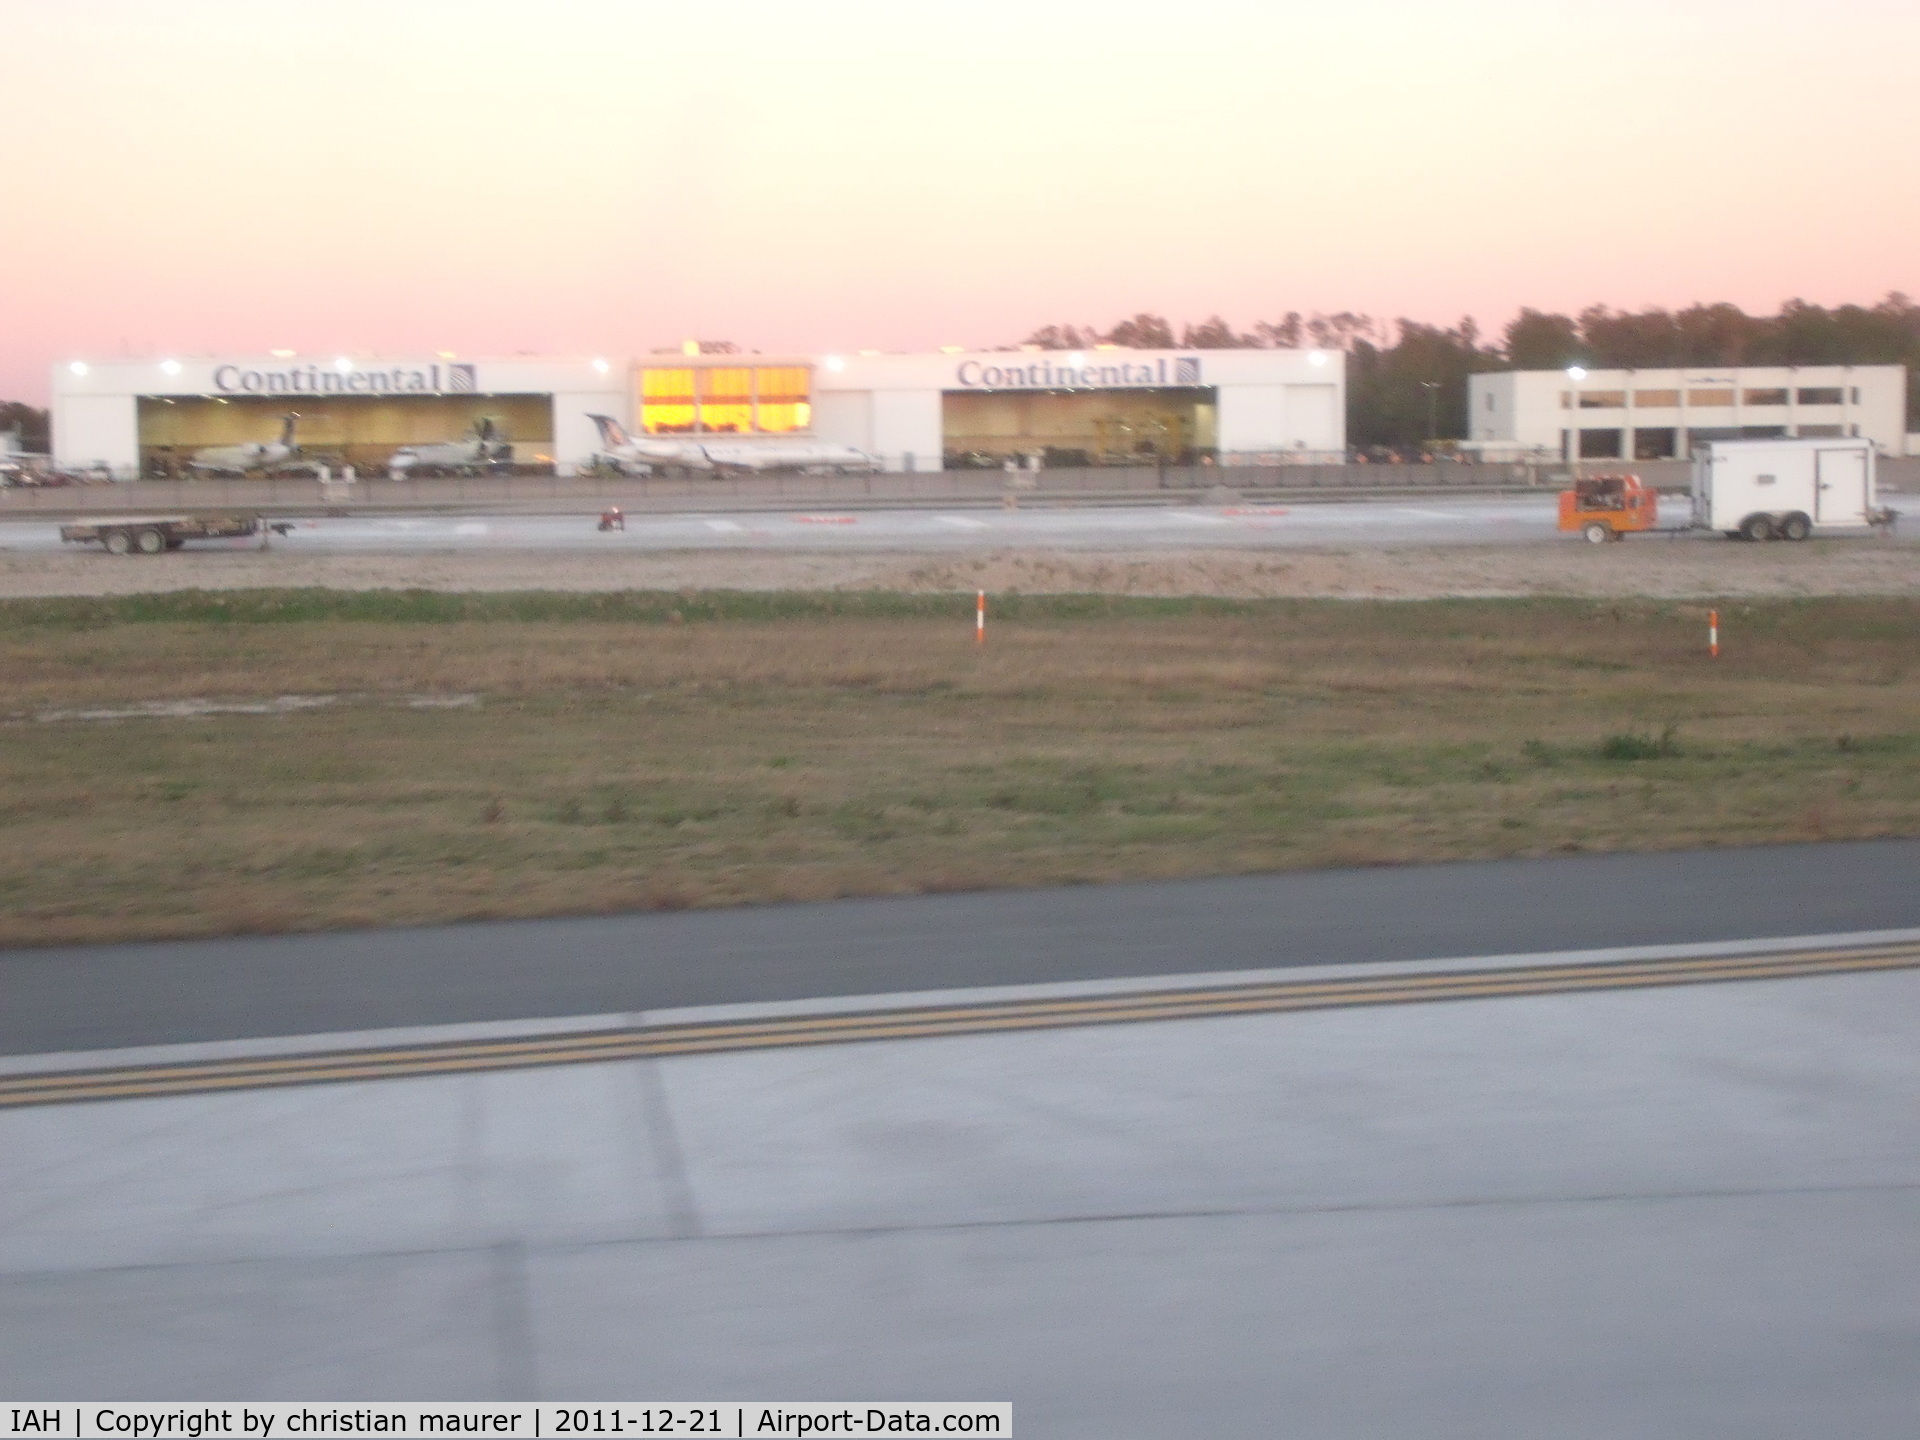 George Bush Intercontinental/houston Airport (IAH) - continental/expressJet hanger